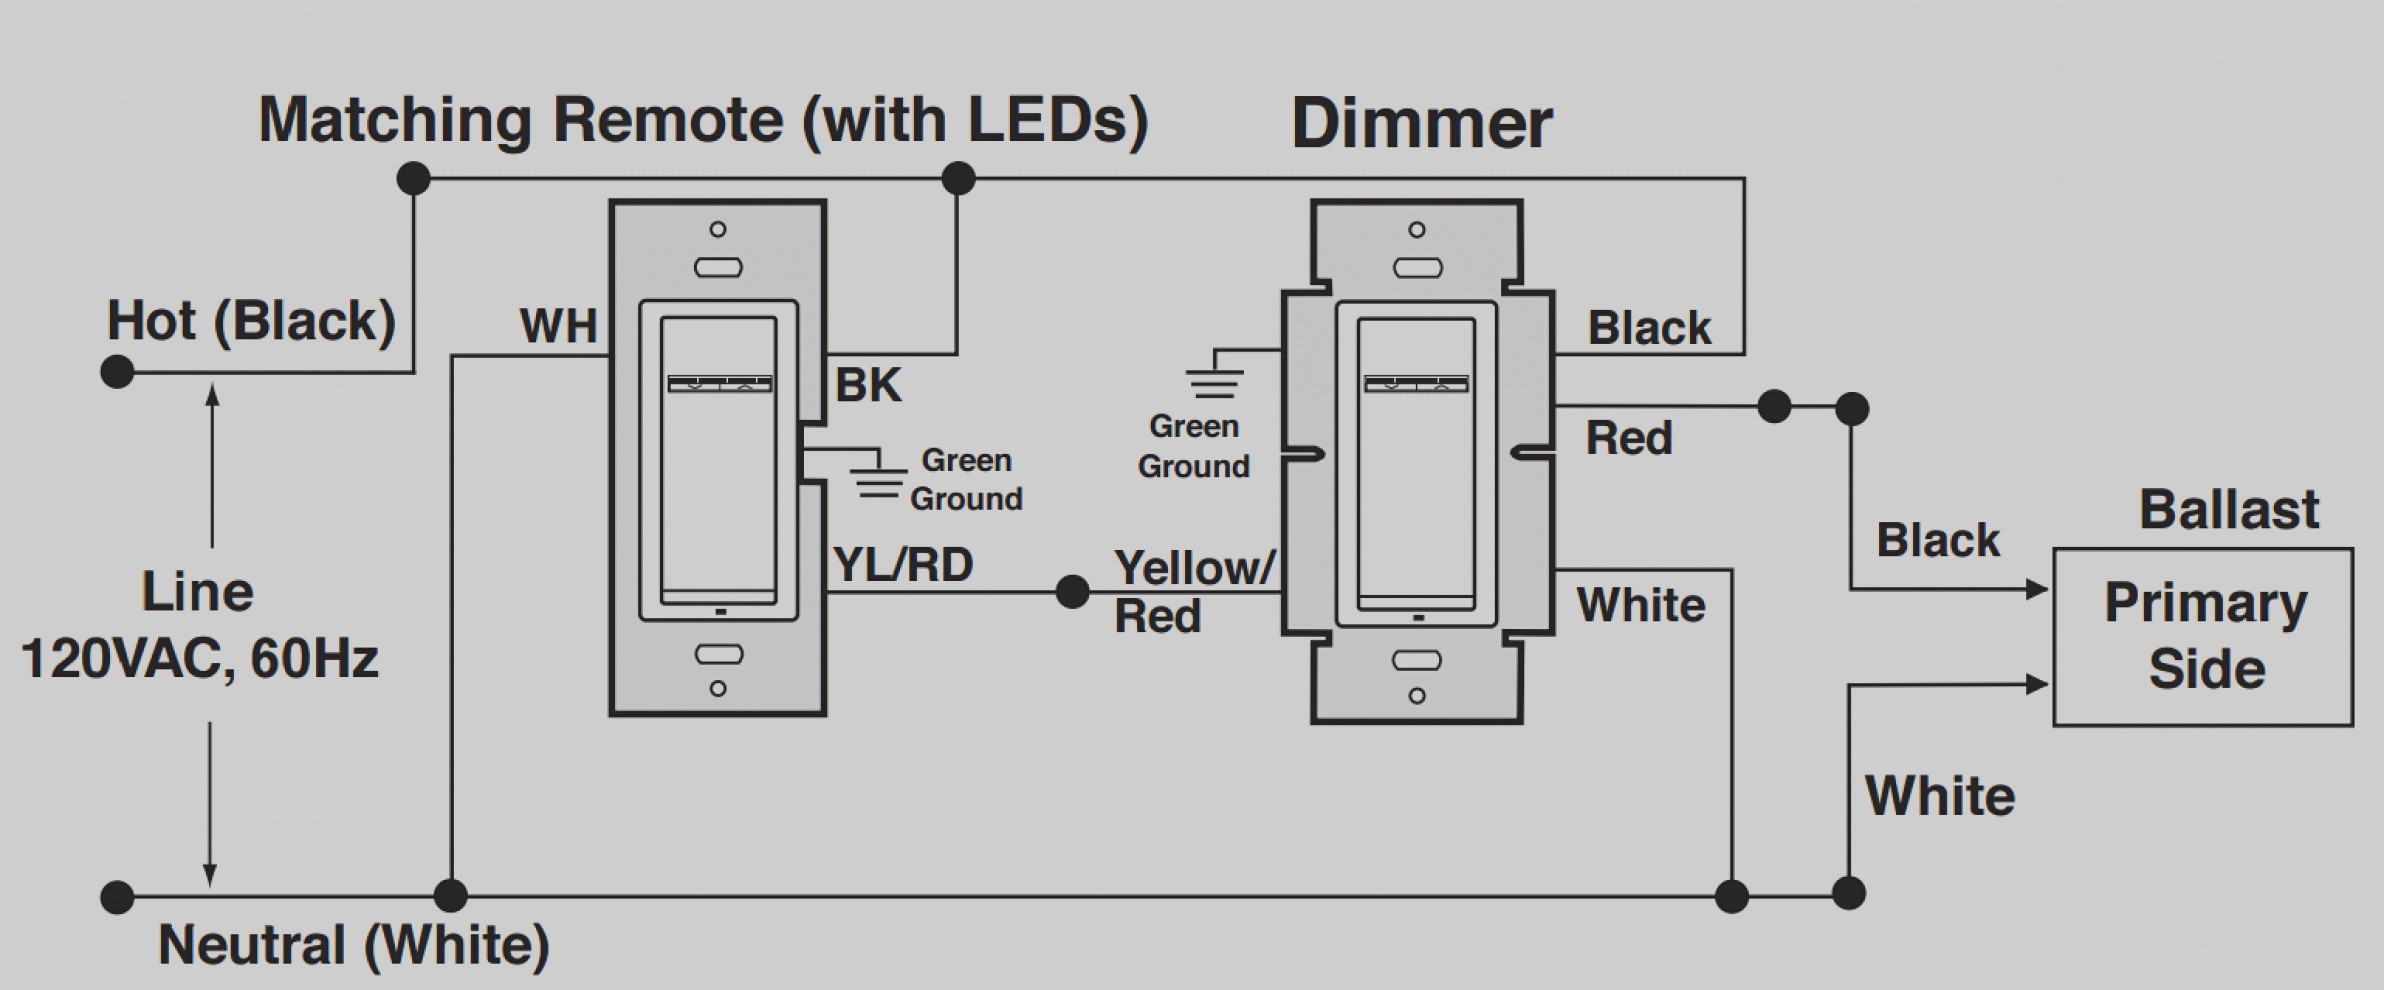 Gallery Elv Dimmer Wiring Diagram Lutron Switch 4 Way Headlight